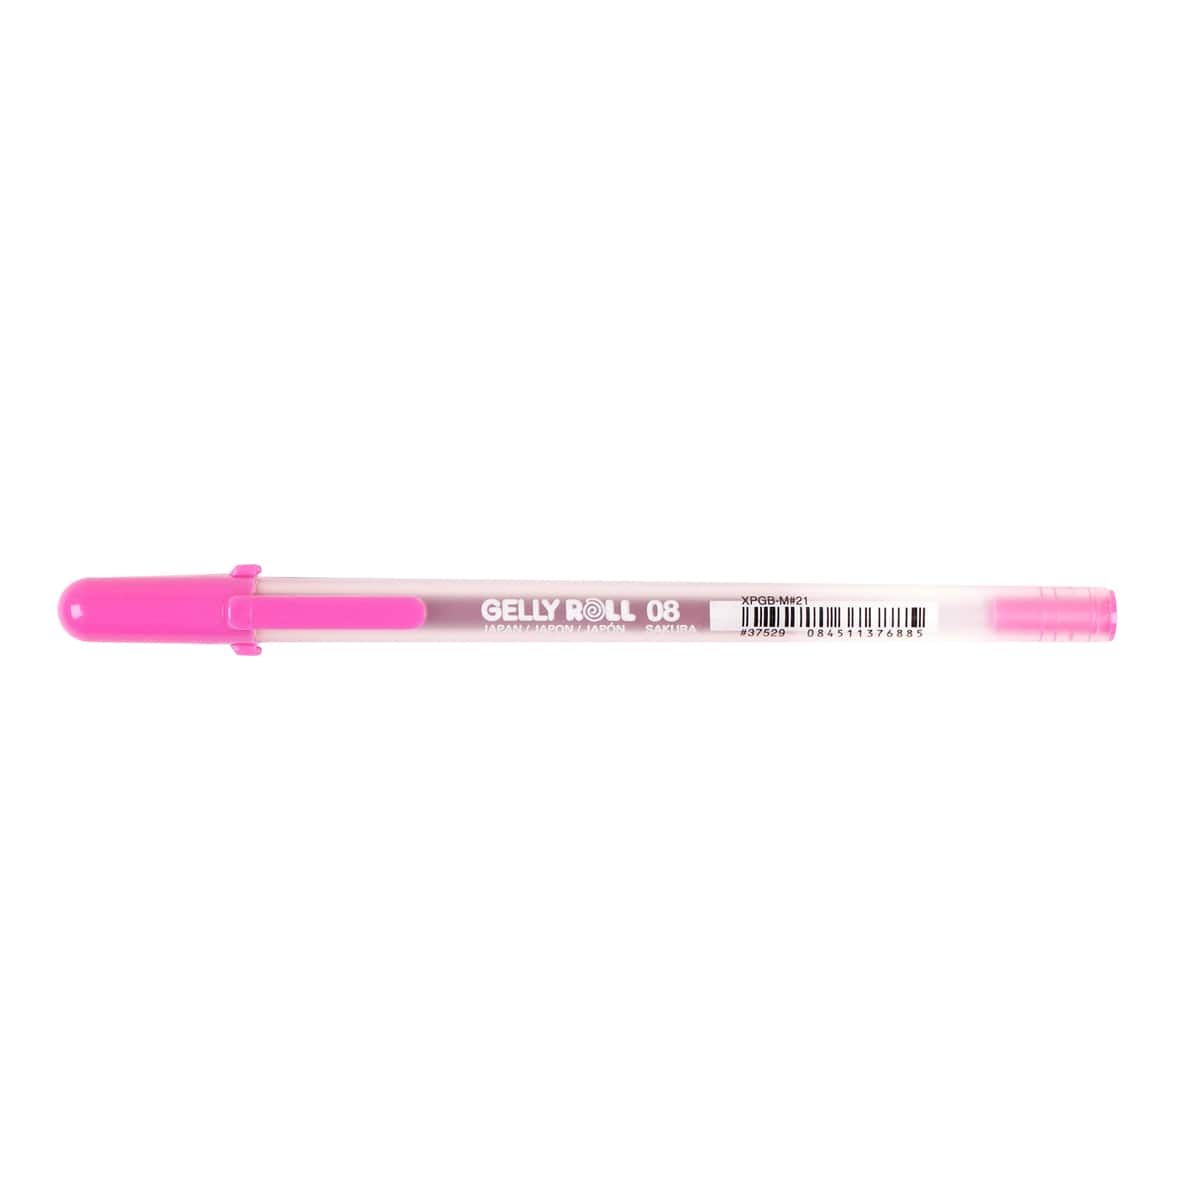 3 x Sakura Gelly Roll White Gel Pen Medium - Cheapest on !!! XPGB-M